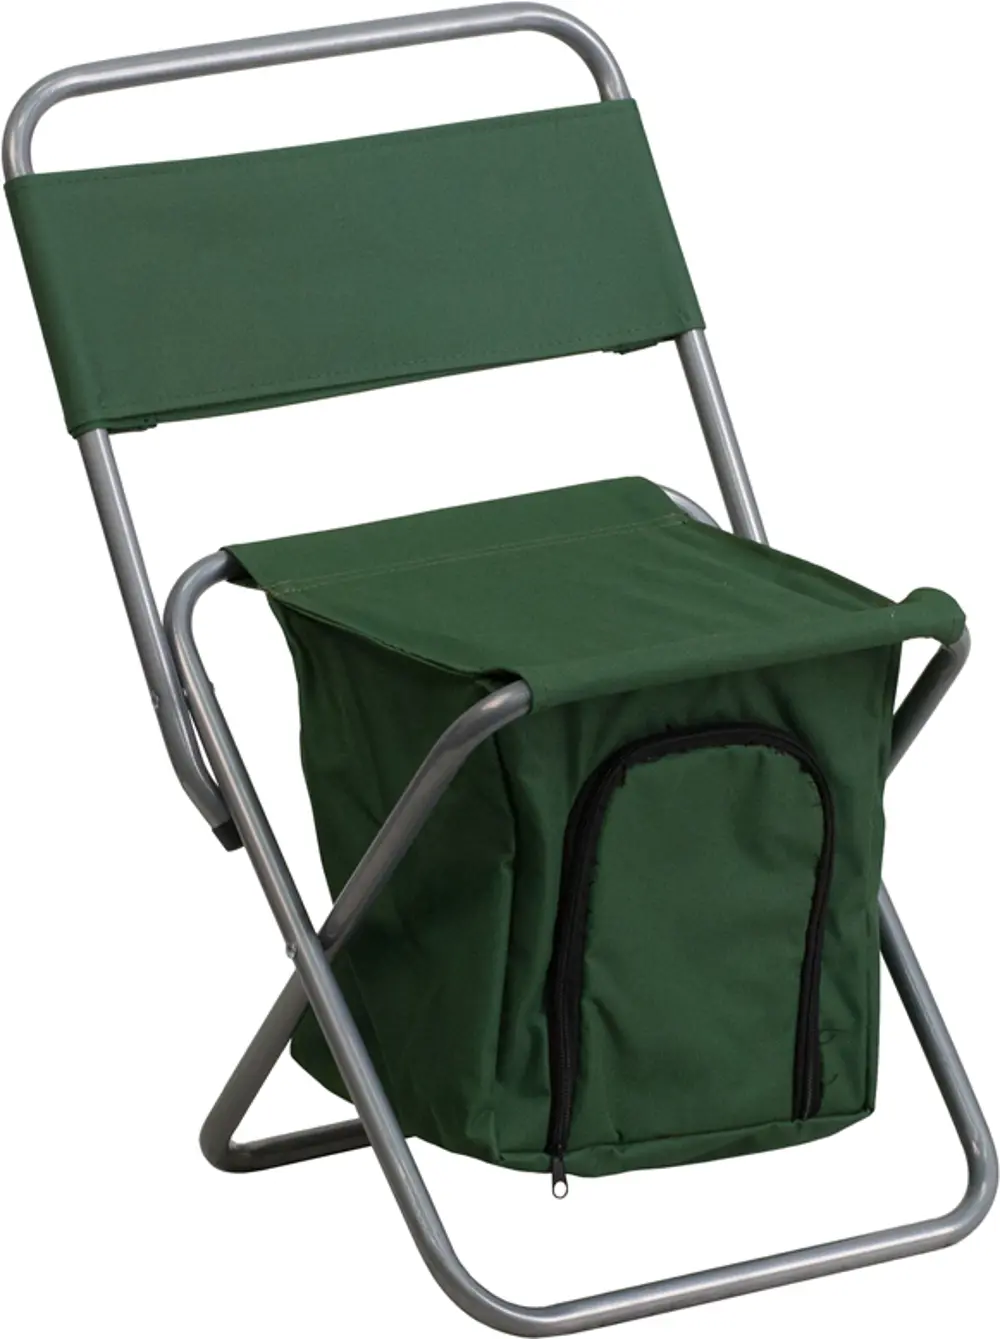 Kids Green Folding Camping Chair-1